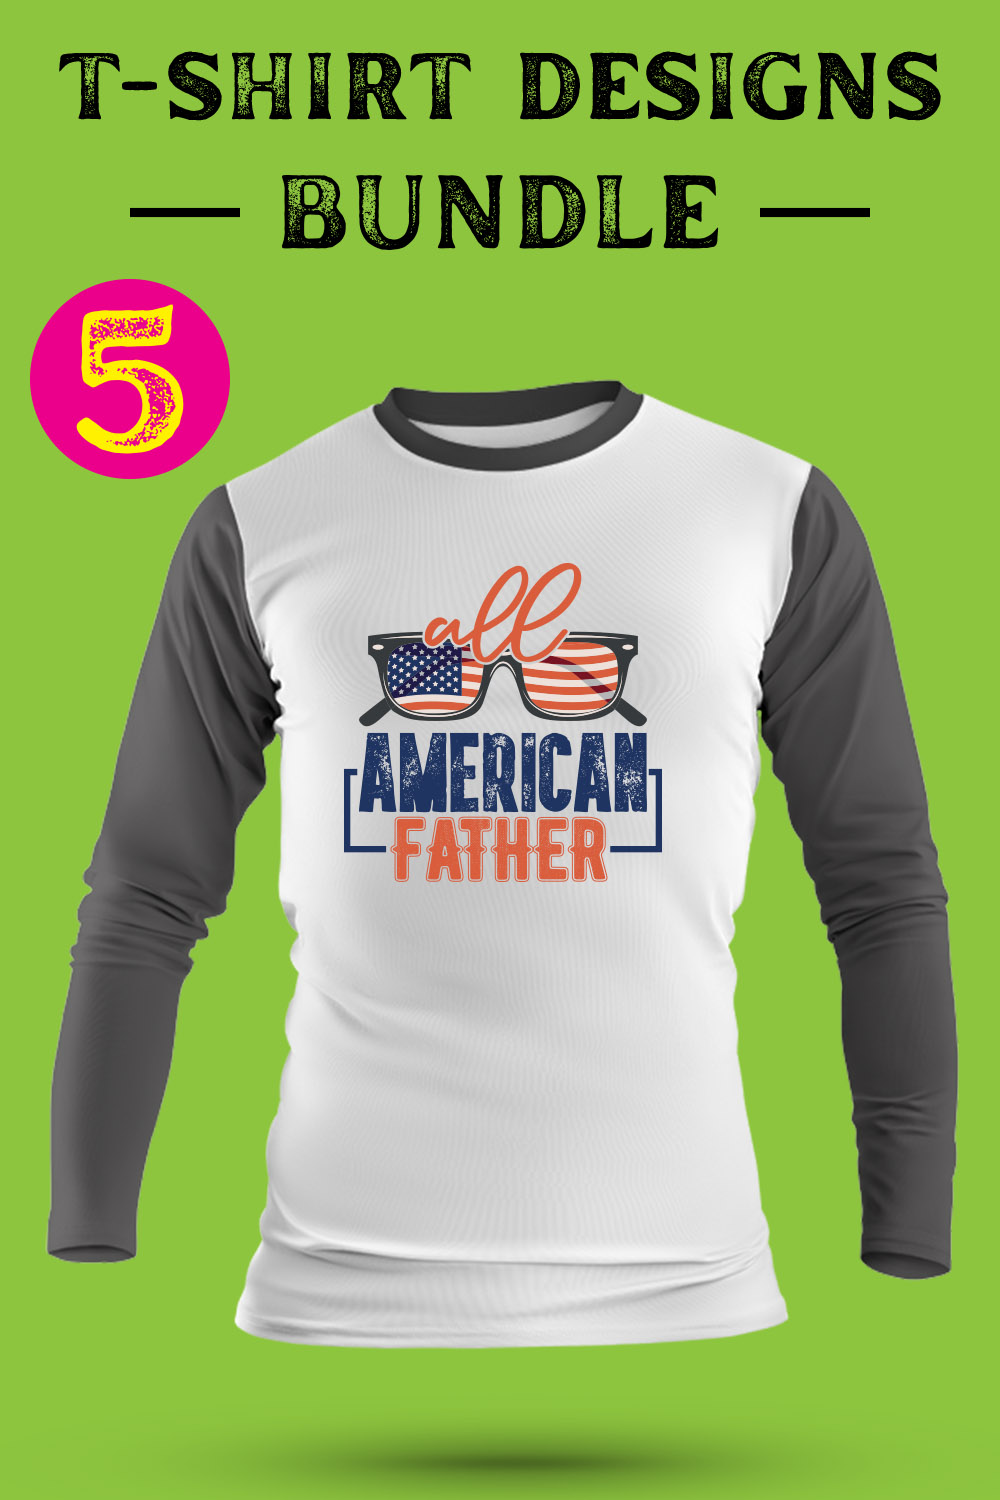 American flag T Shirt Designs Bundle pinterest preview image.